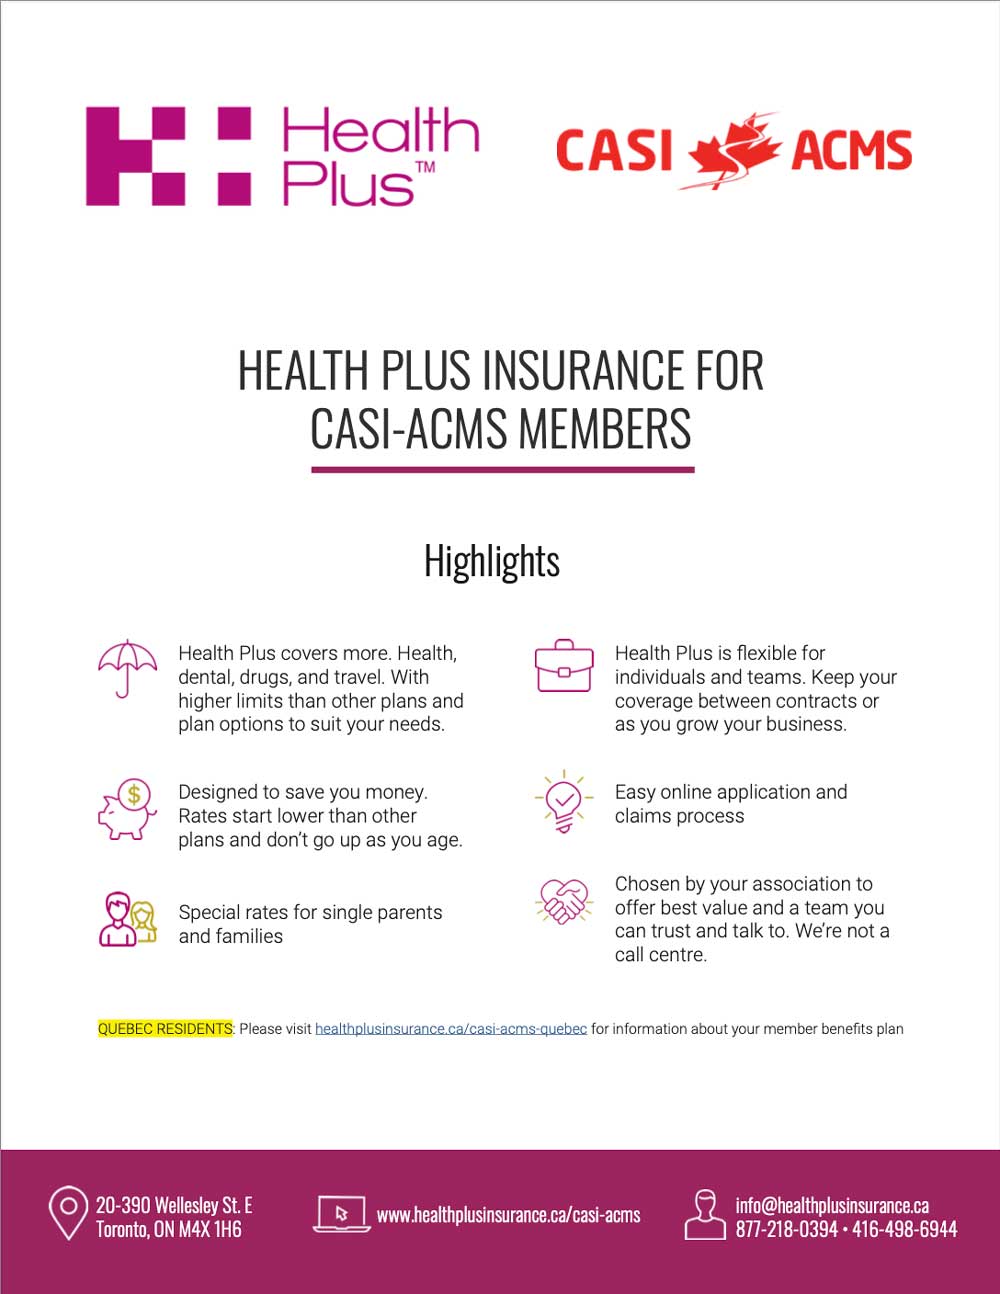 CASI-ACMS health insurance